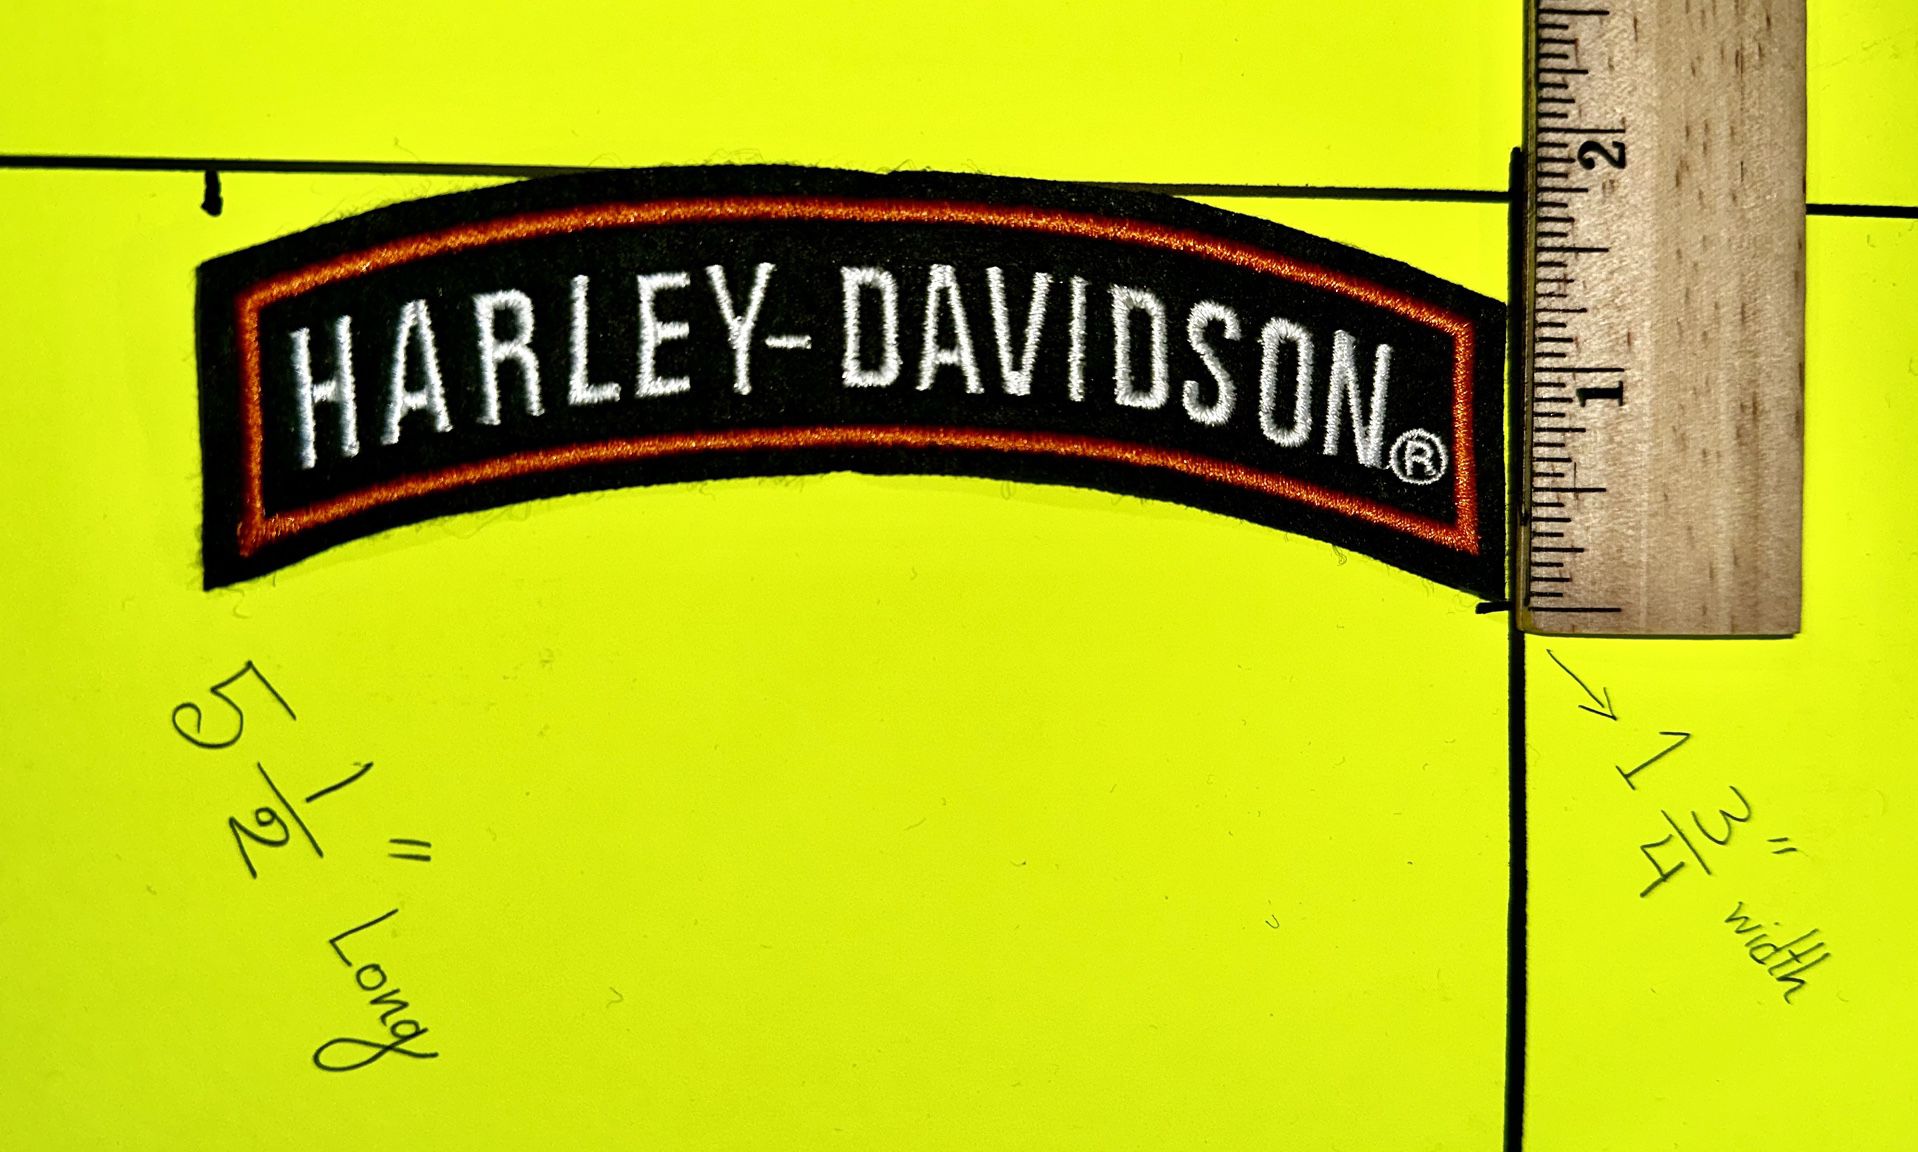 Harley-Davidson Sew- on Patch, Size: 5.1/2" x 1.3/4"